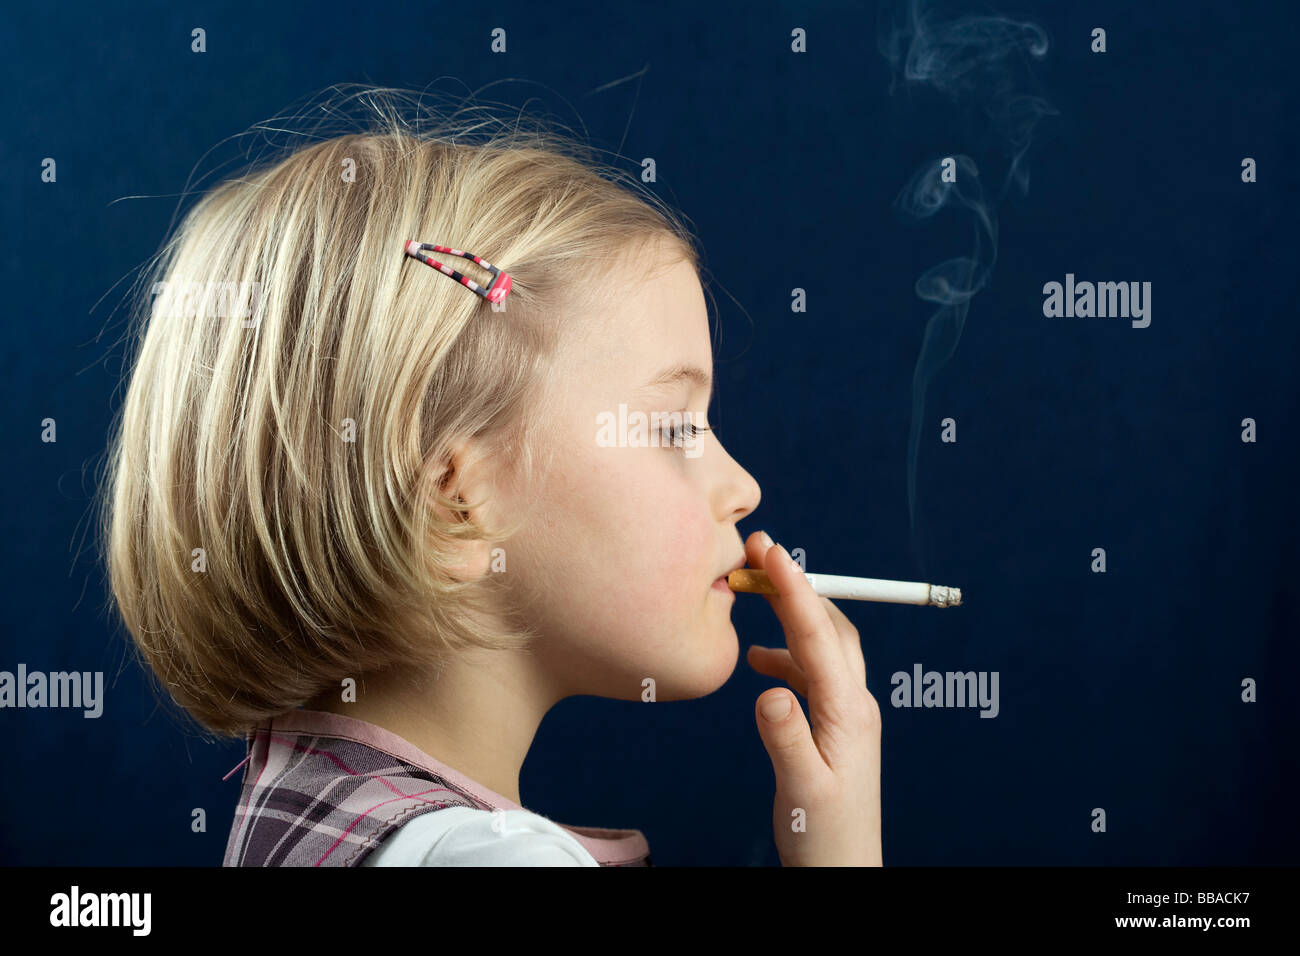 Little girl 8 12 private tabu. Маленькие курящие девочки. Маленькие курильщицы. Ребенок с сигаретой. Маленькая девочка курит сигарету.